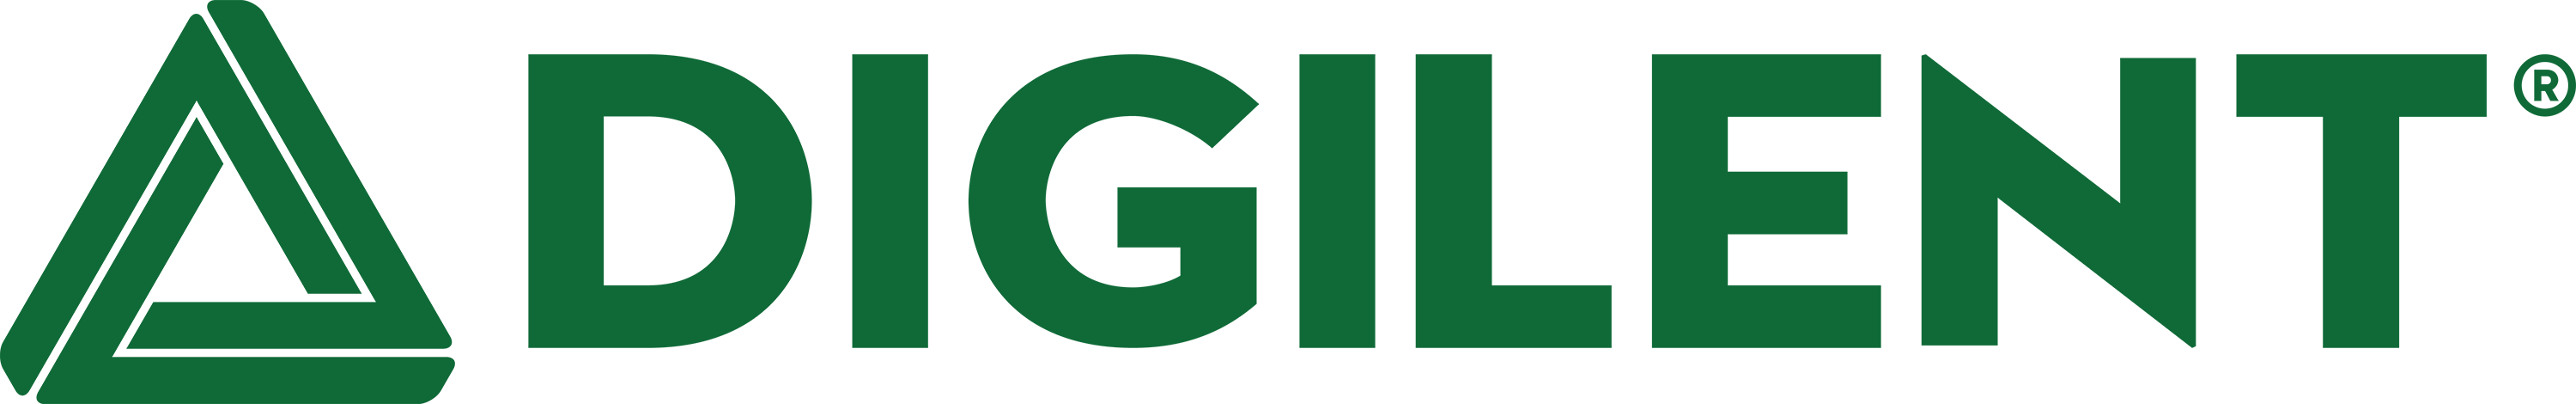 digilent-logo2015-mono-green-3000.png